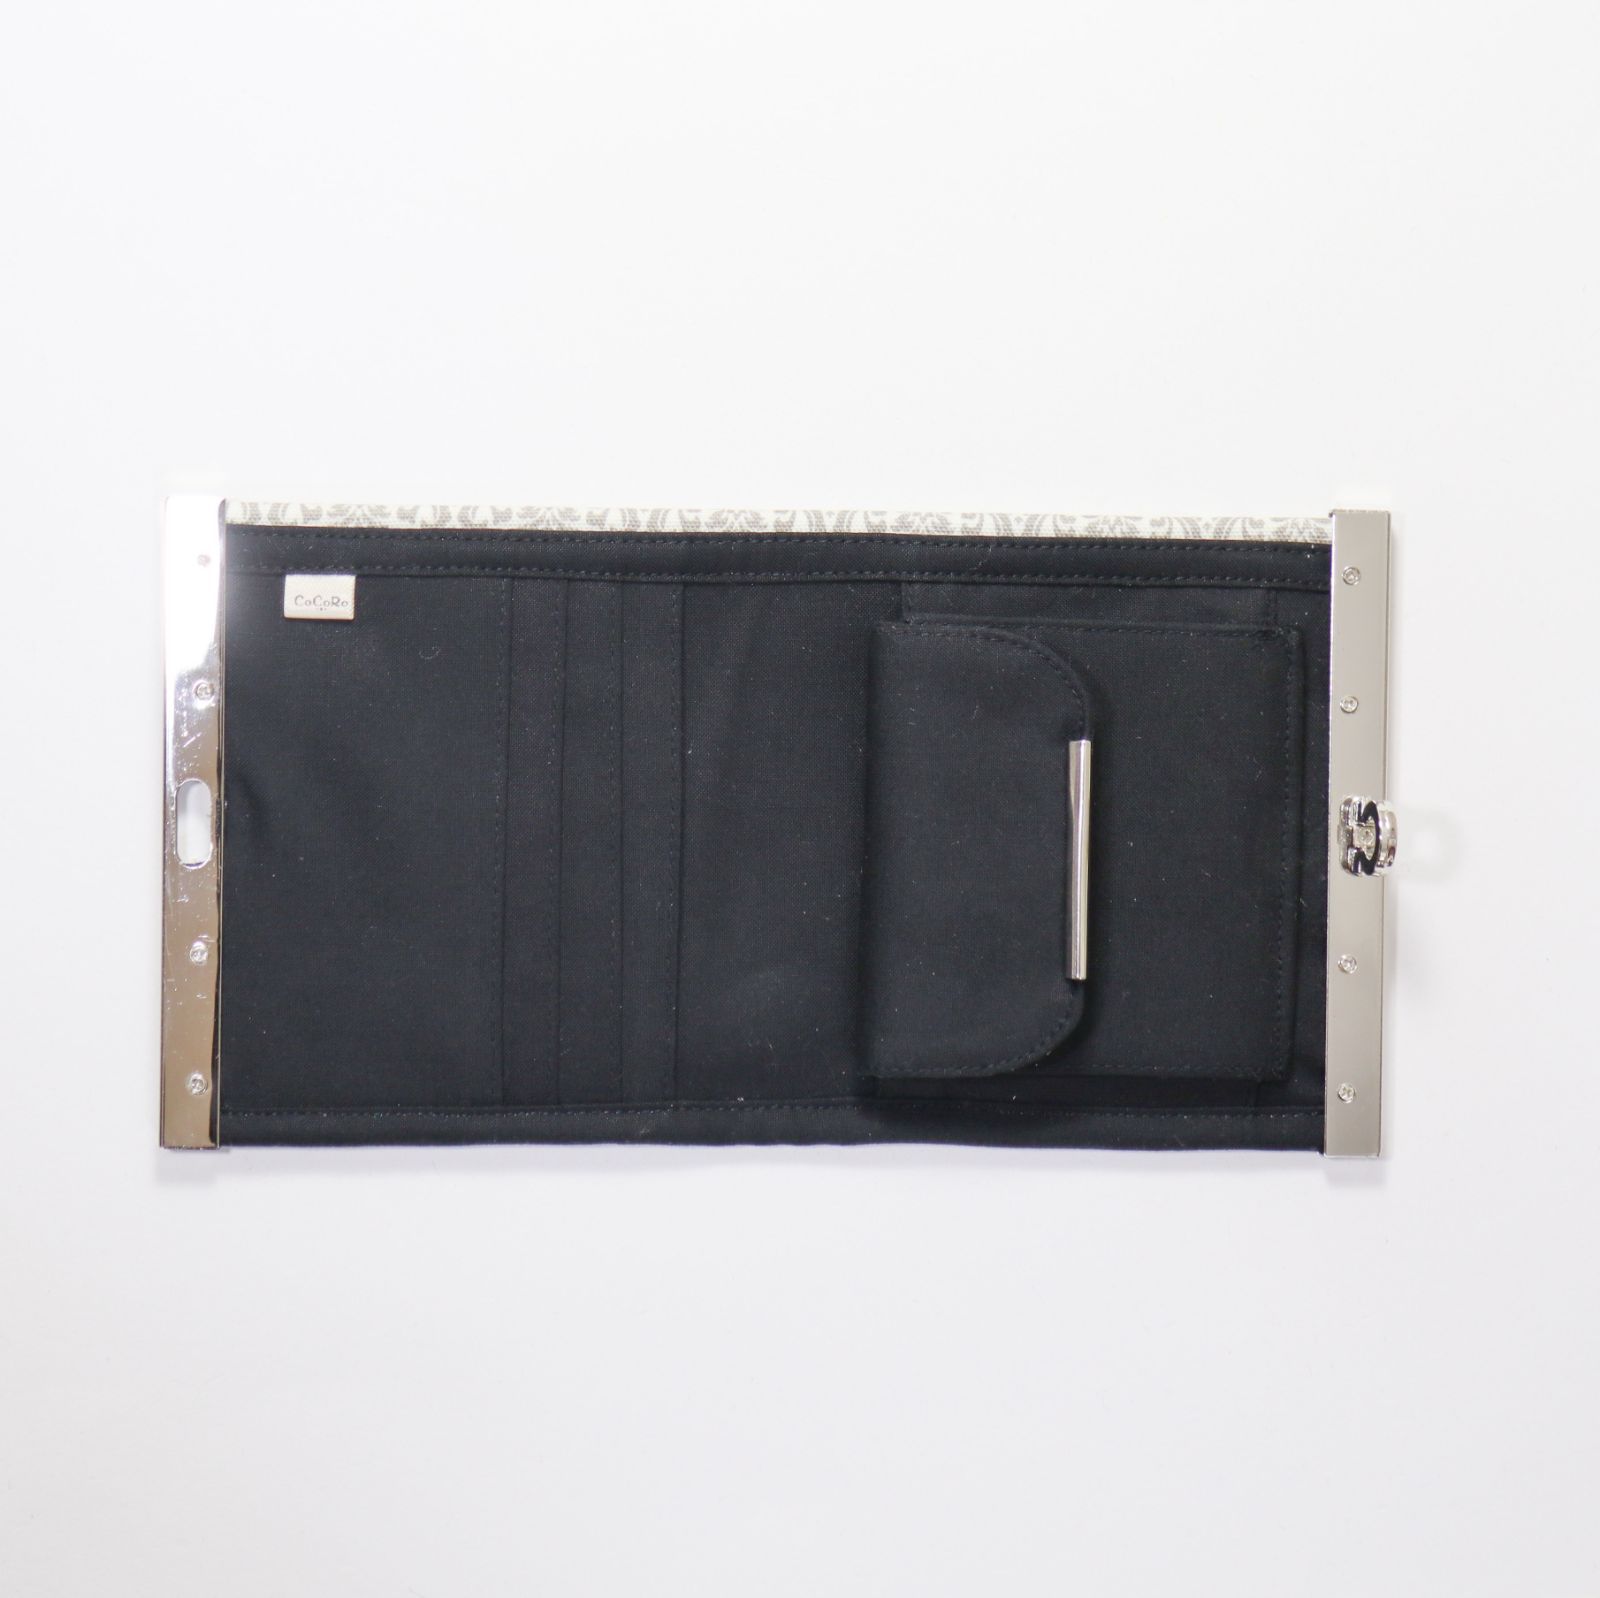 dam】コンパクト 色変更可 直線口金の二つ折り財布 ダマスク グレー